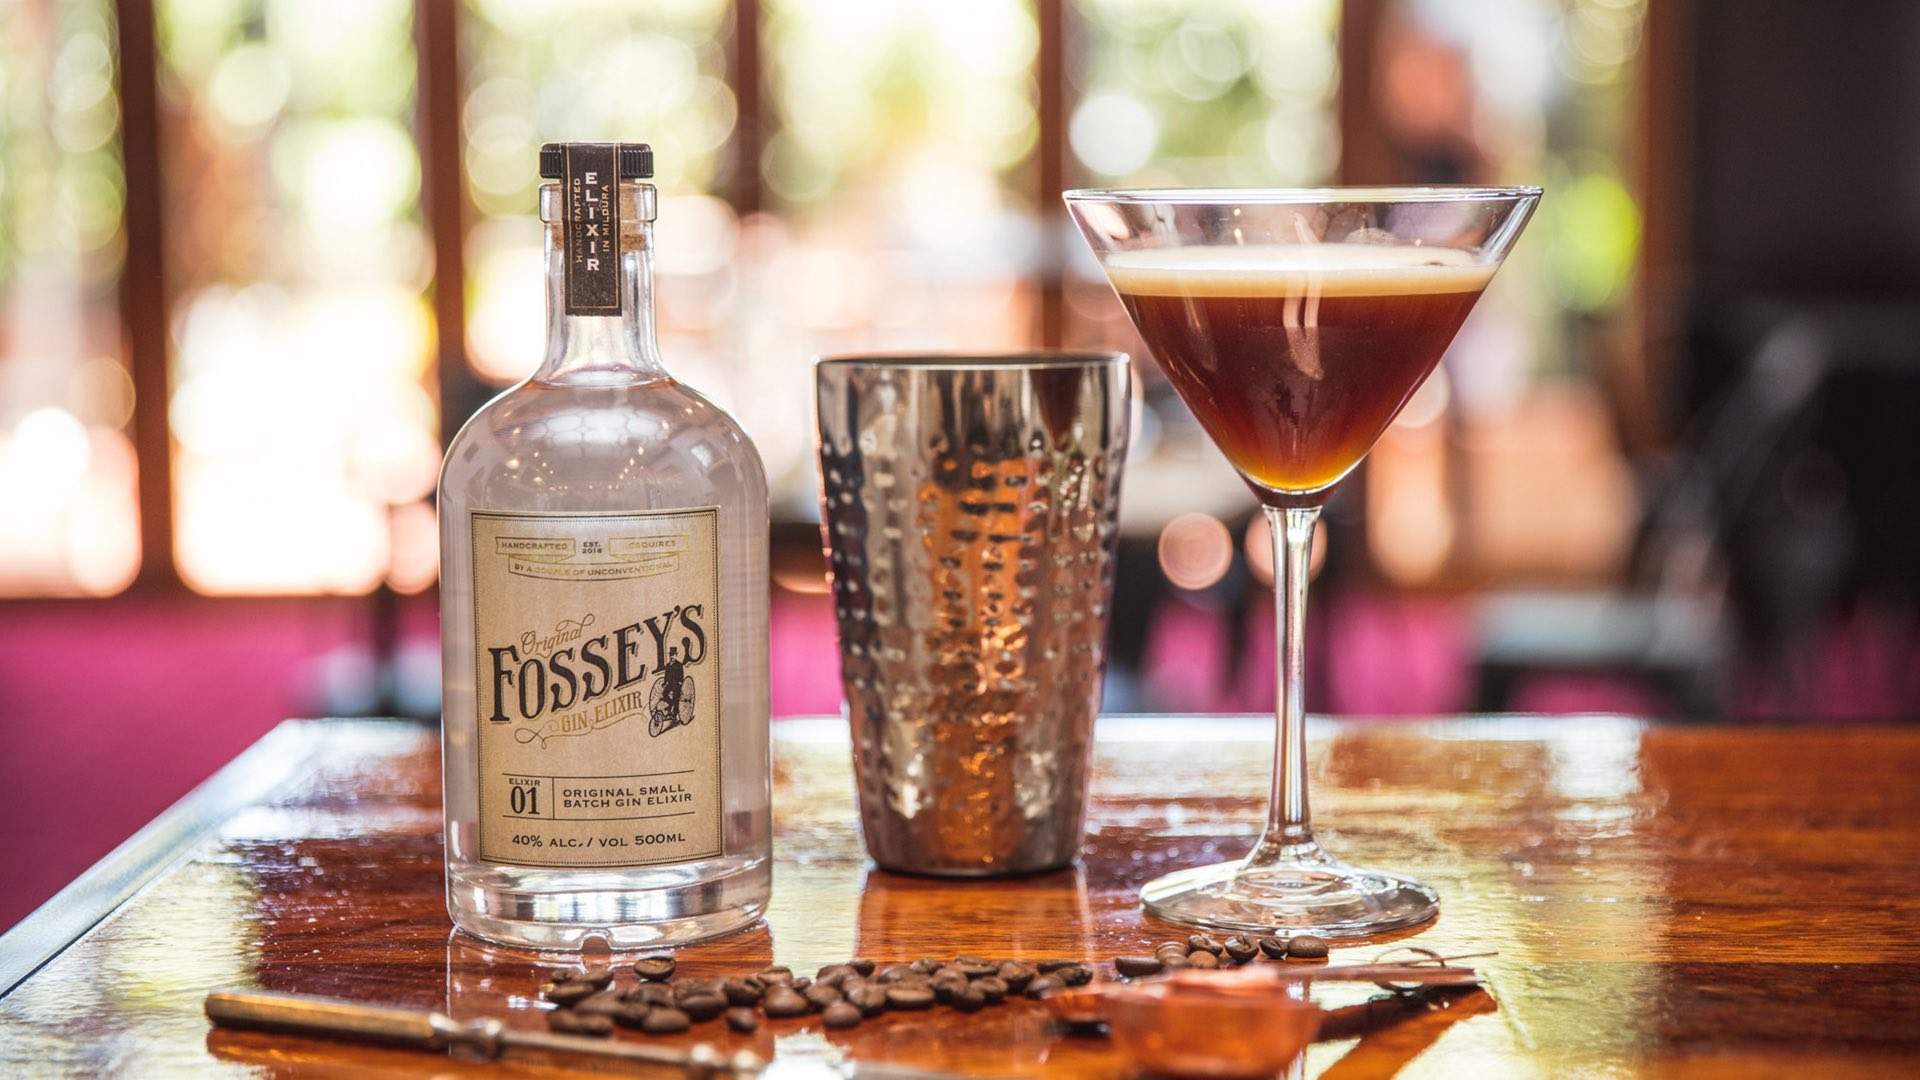 Fossey's Ginporium & Distillery